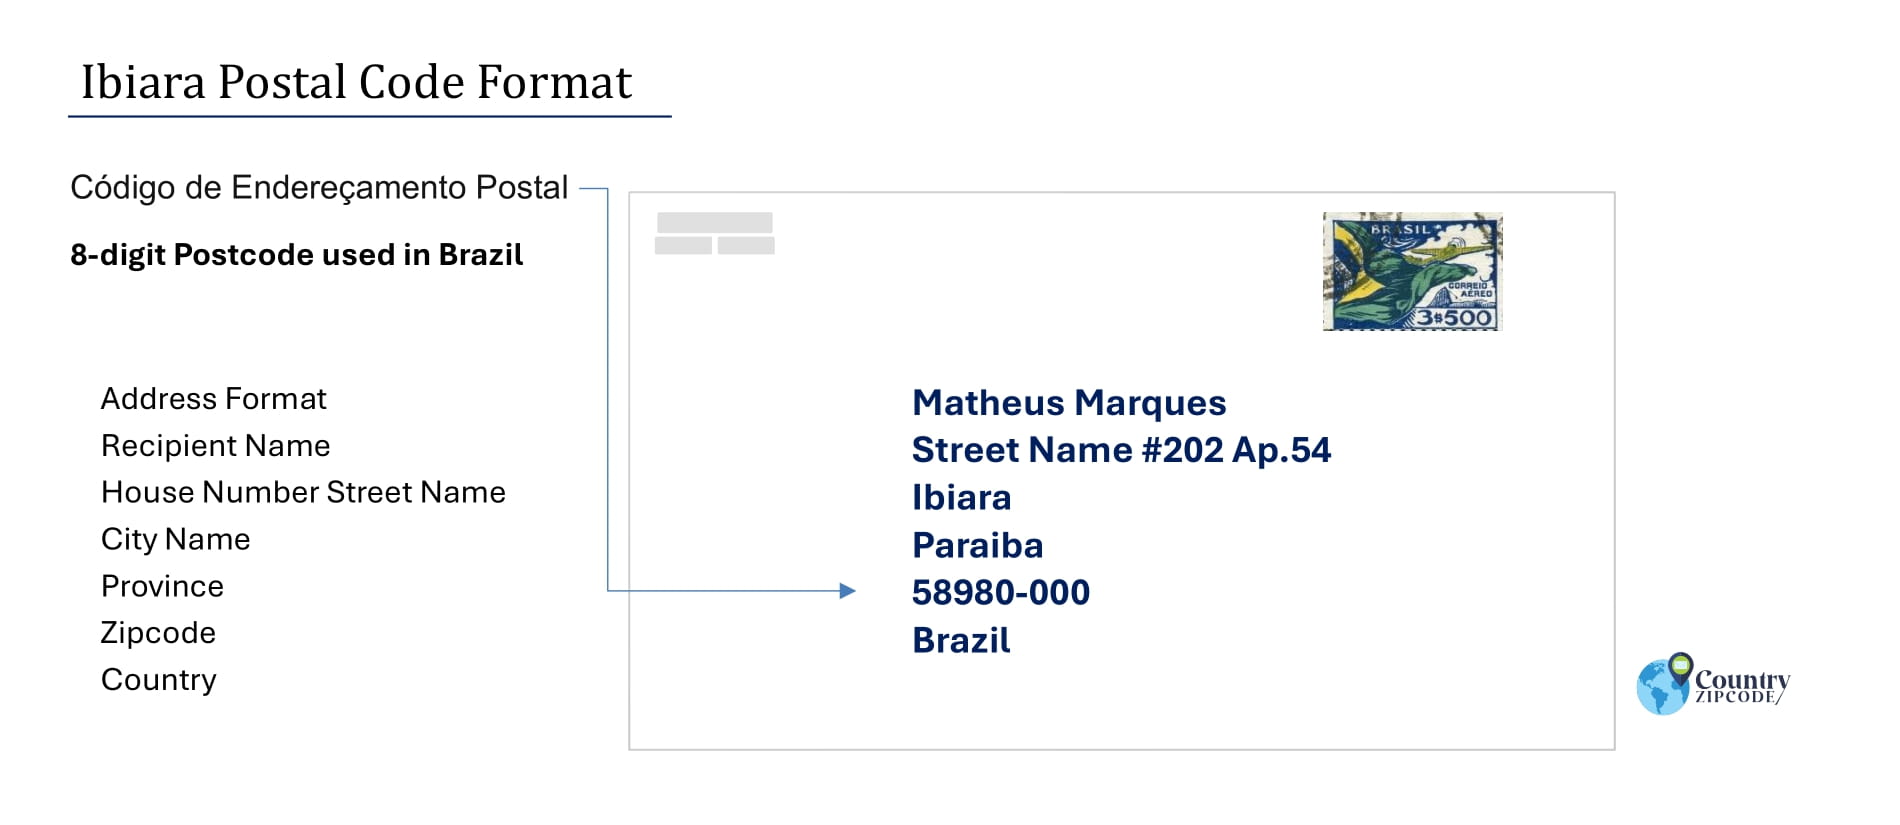 Example of Codigo de Enderecamento Postal and Address format of Ibiara Brazil